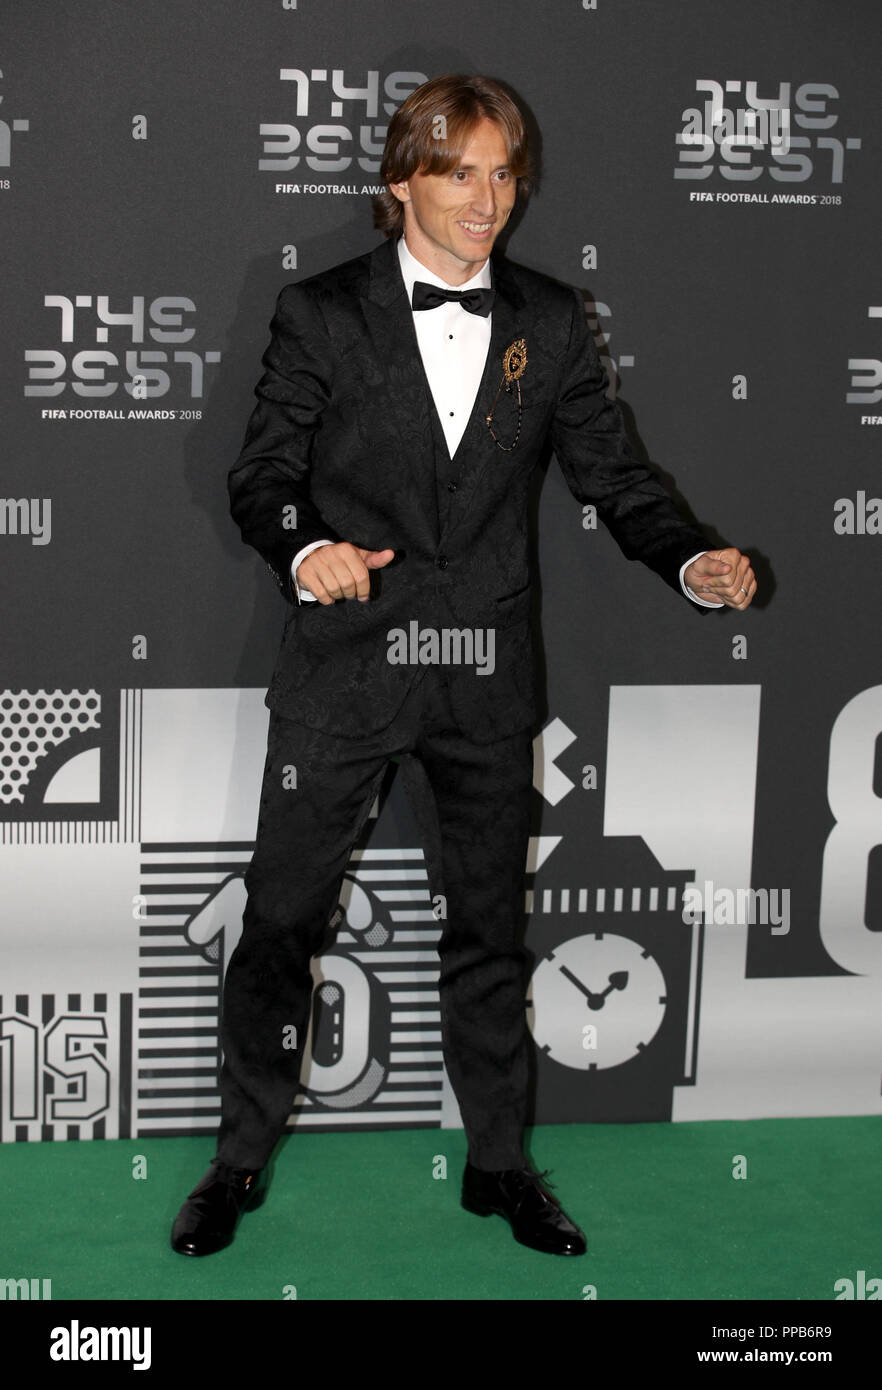 Luka Modric kommt für die beste FIFA Fußball-Awards 2018 in der Royal Festival Hall, London. Stockfoto